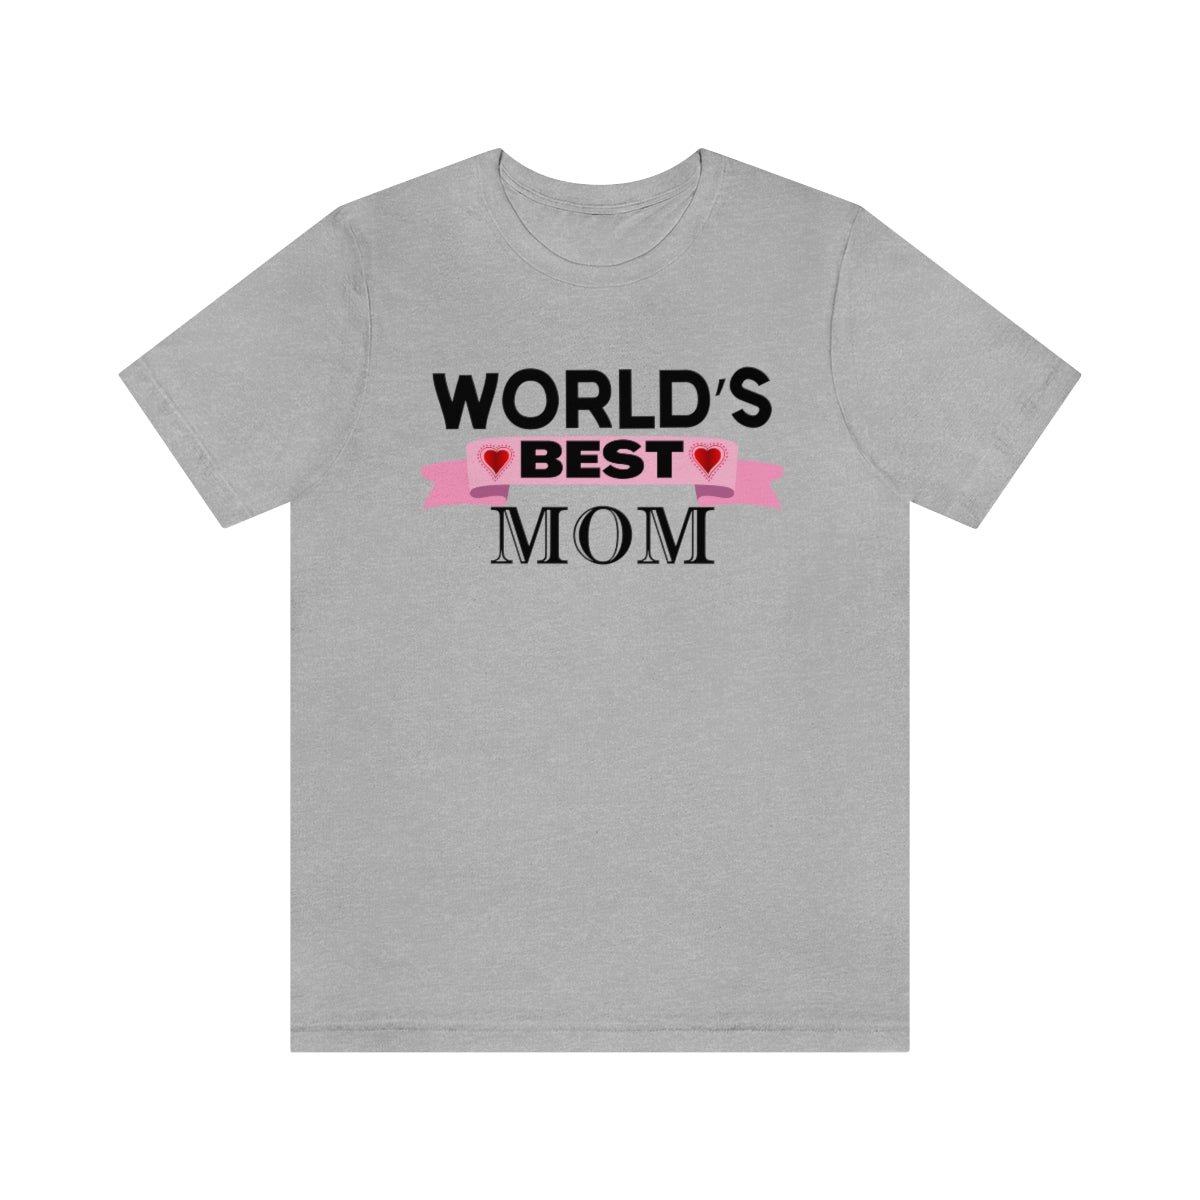 World' s Best Mom - T-Shirt